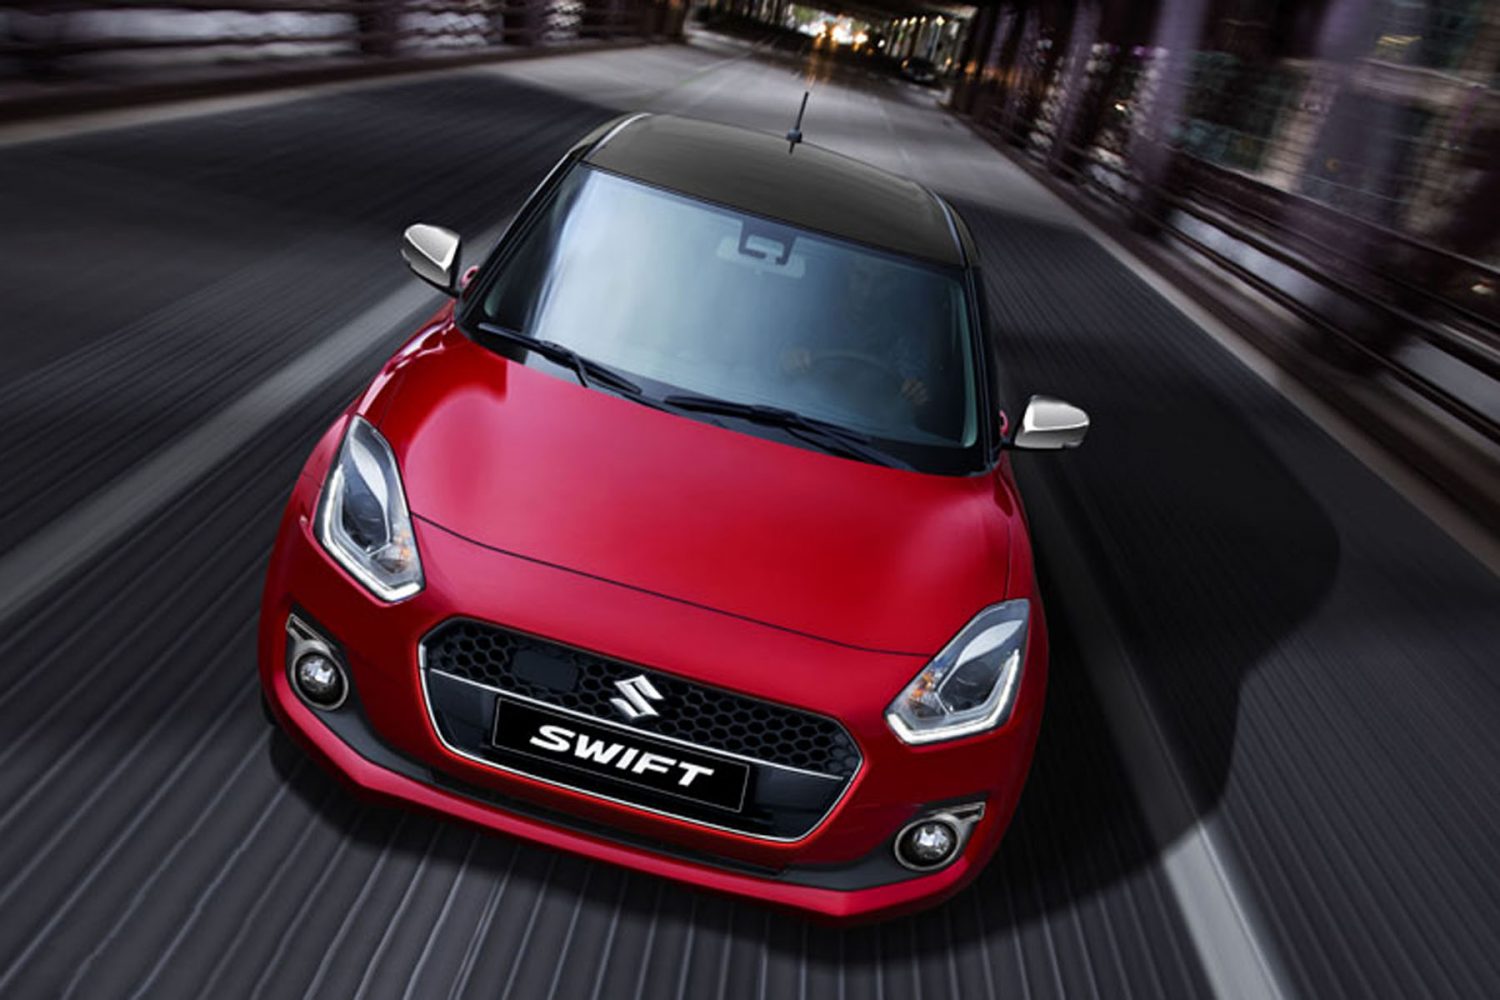 Suzuki Swift Web Limited Edition